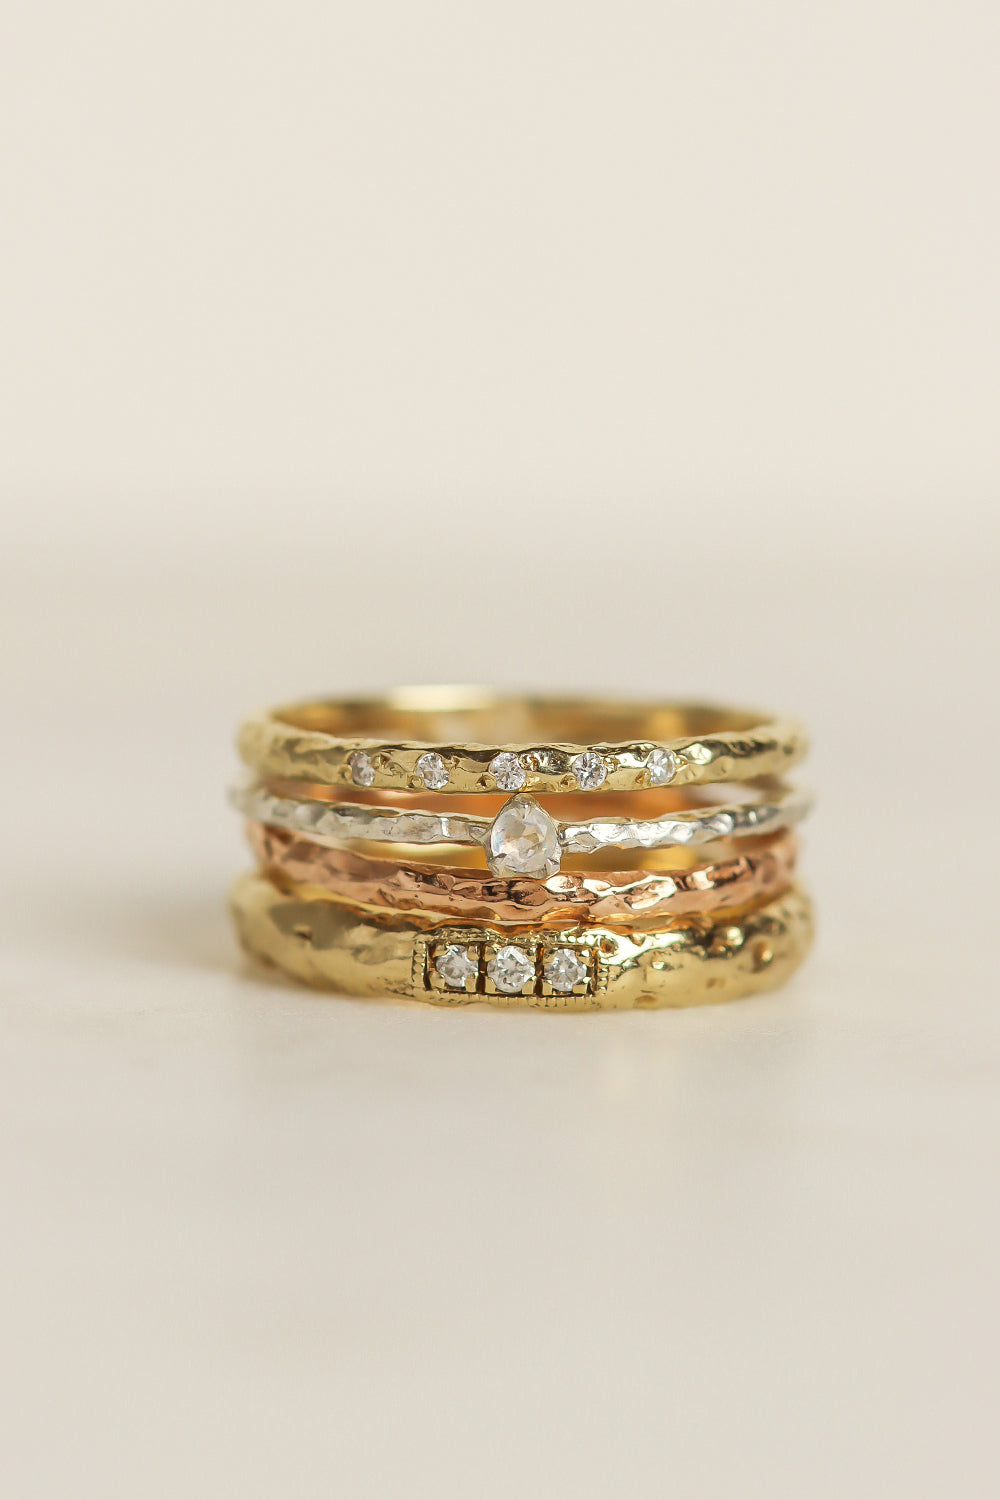 Strela Antique Three Stone Old European Cut Diamond Engagement Ring |  Stacked wedding rings, Mixed metal wedding rings, Three stone engagement  rings